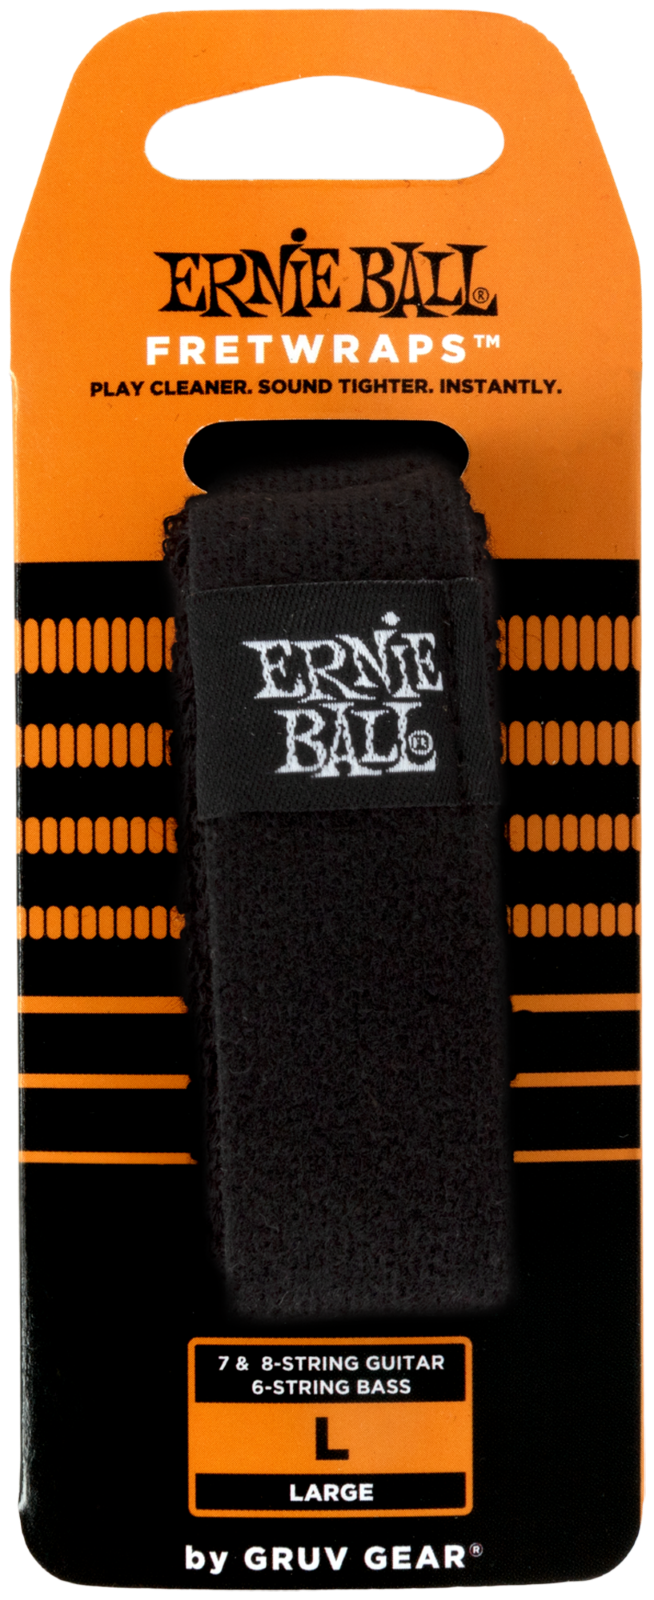 Ernie Ball FretWrap, Gruv Gear, Large : miniature 1